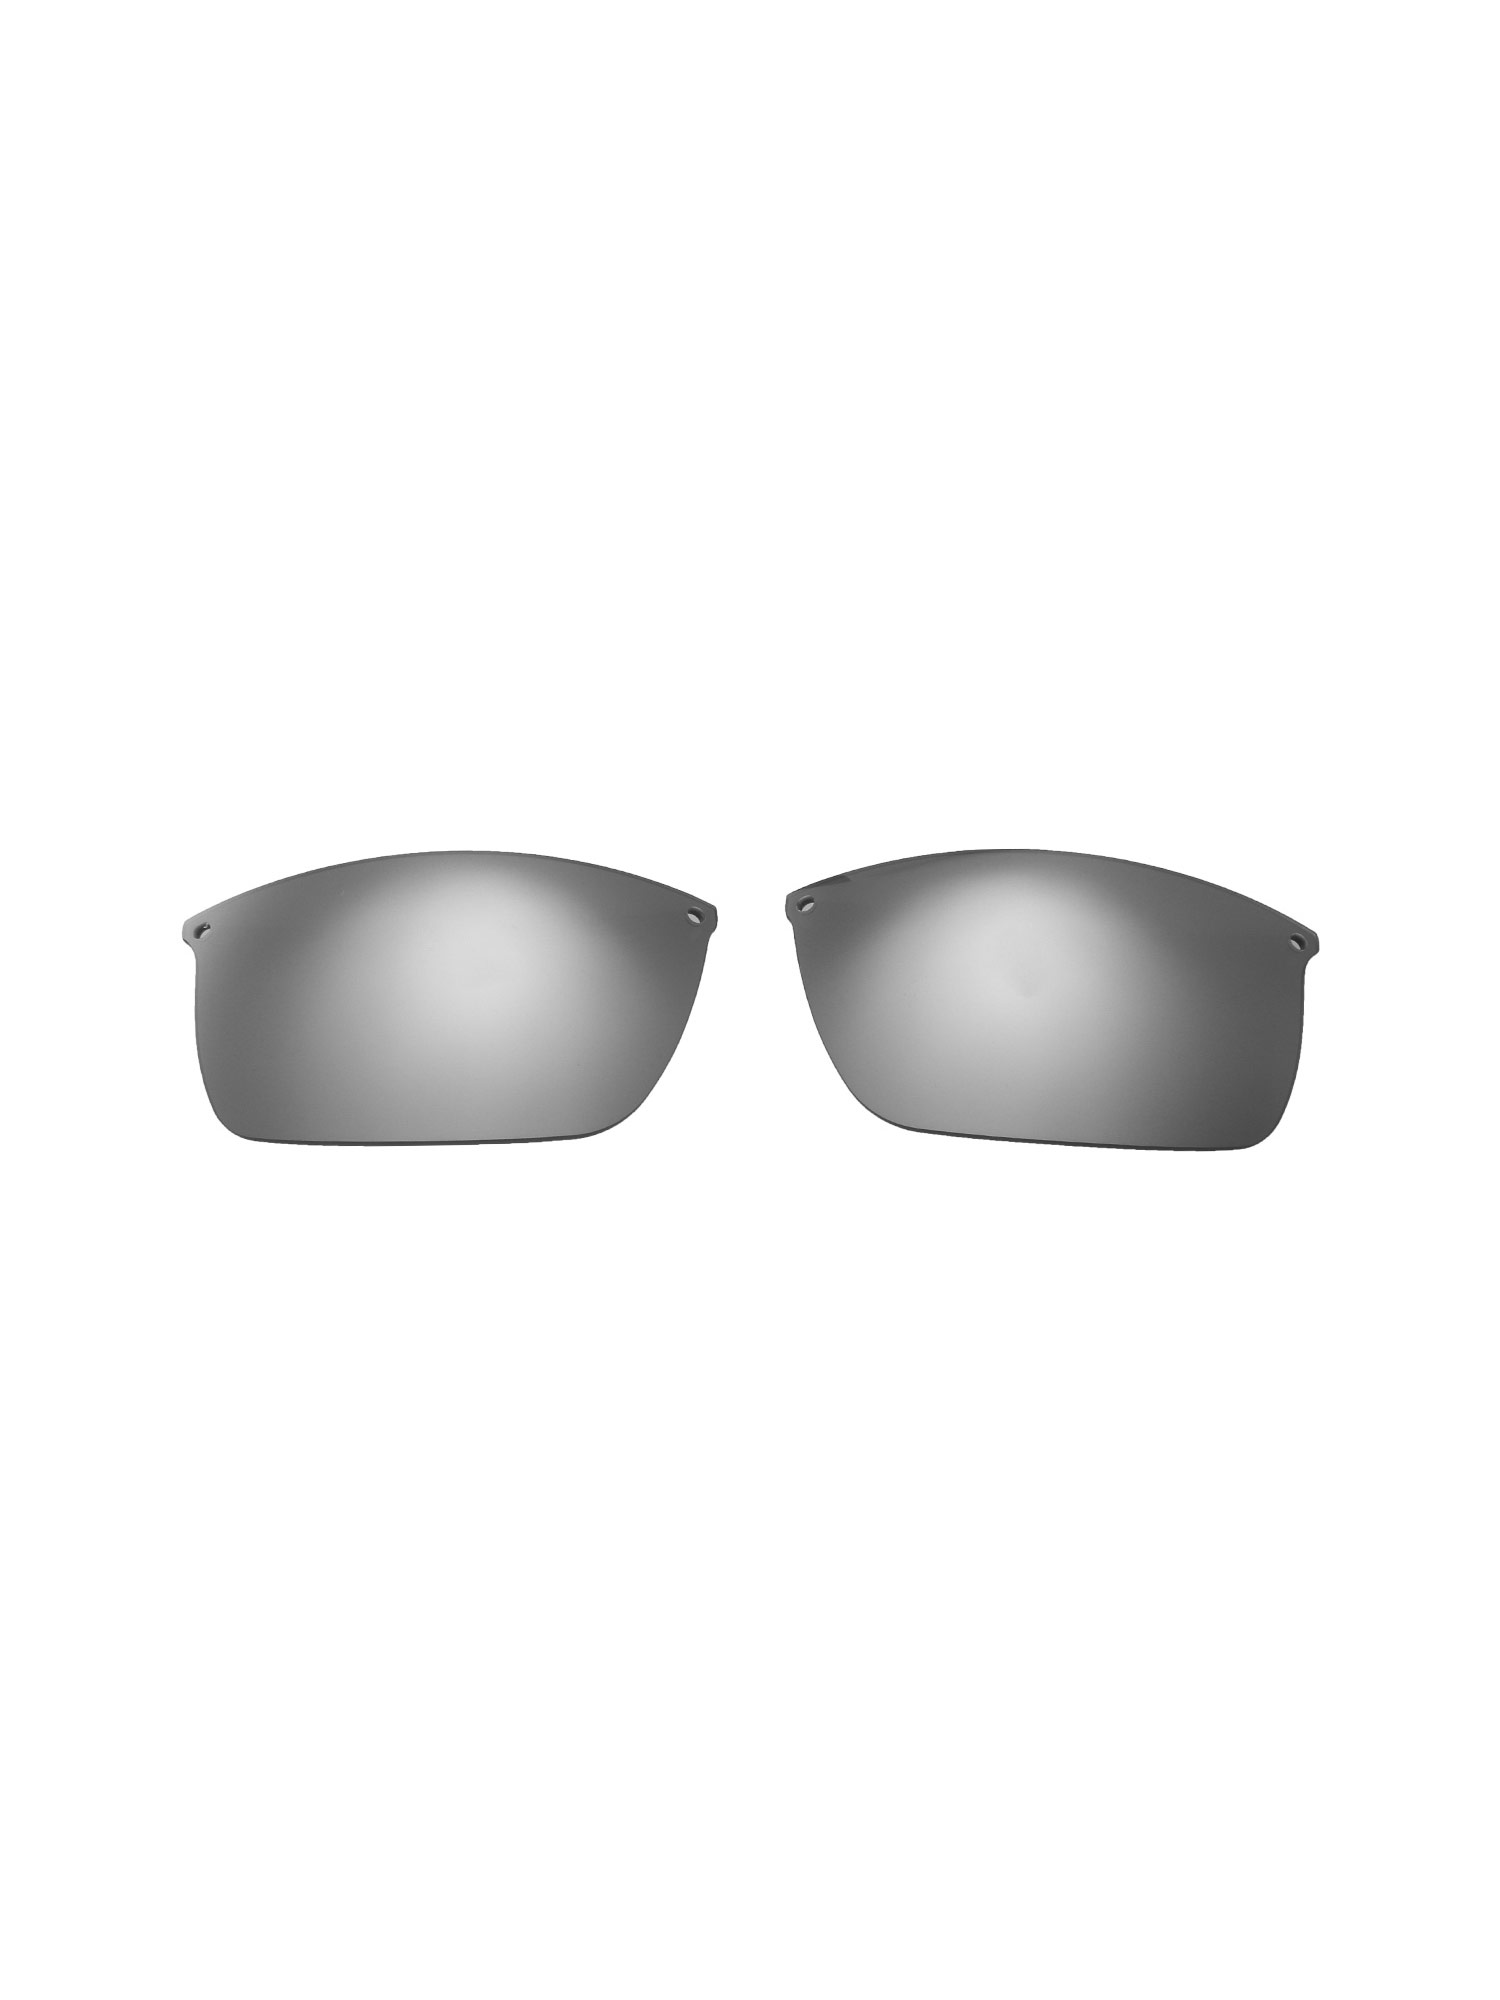 Walleva Black Polarized Replacement Lenses for Oakley Carbon Blade